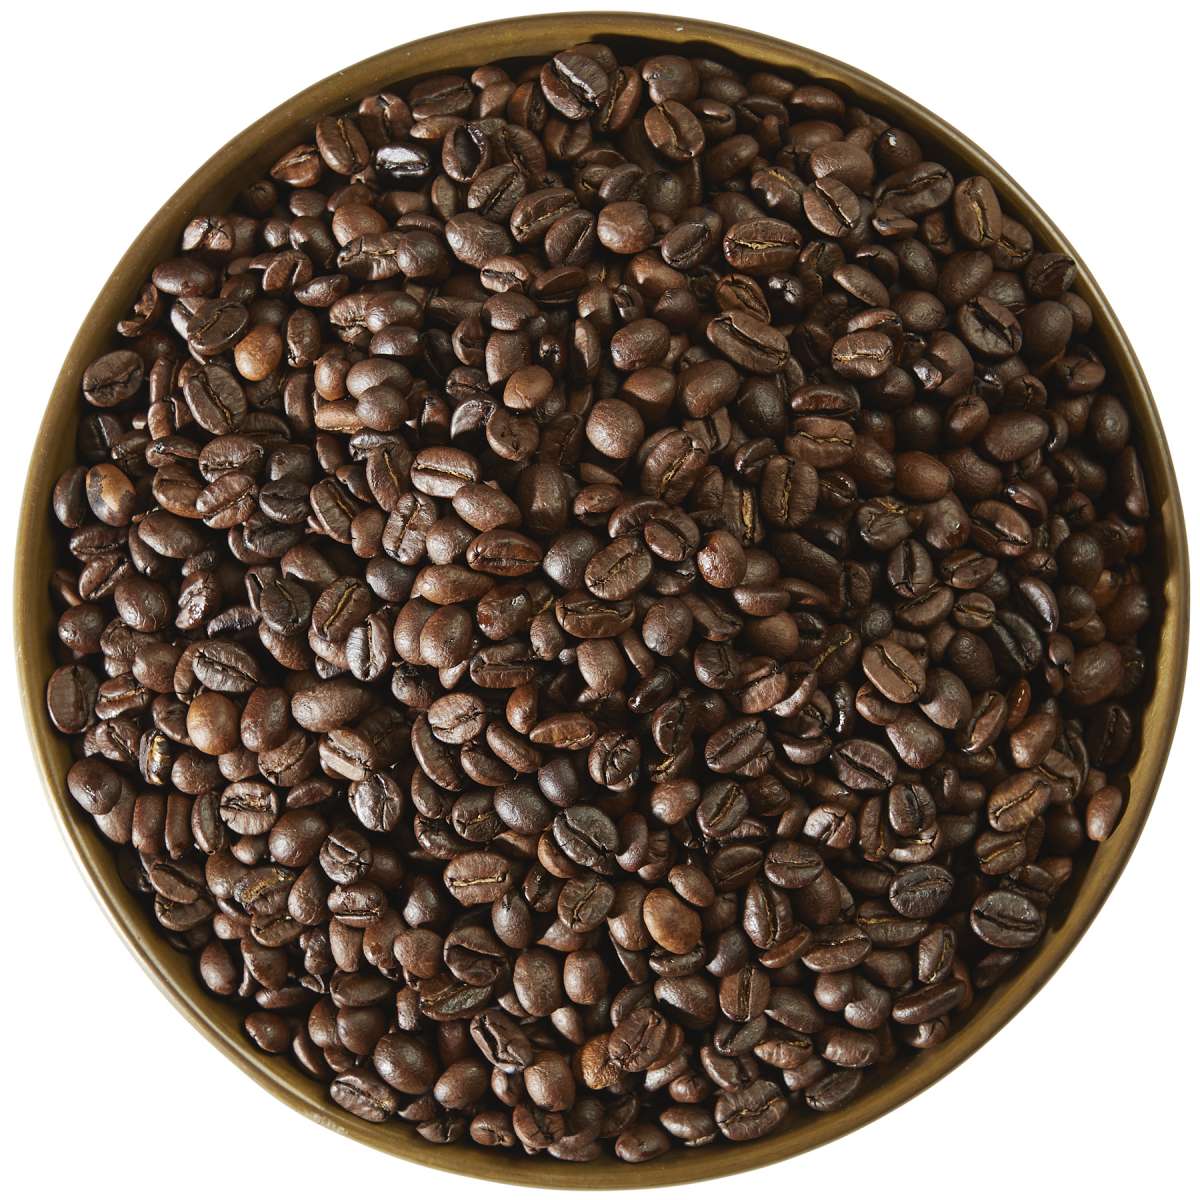 Indonesien Sumatra Bio-Kaffee Bohnen